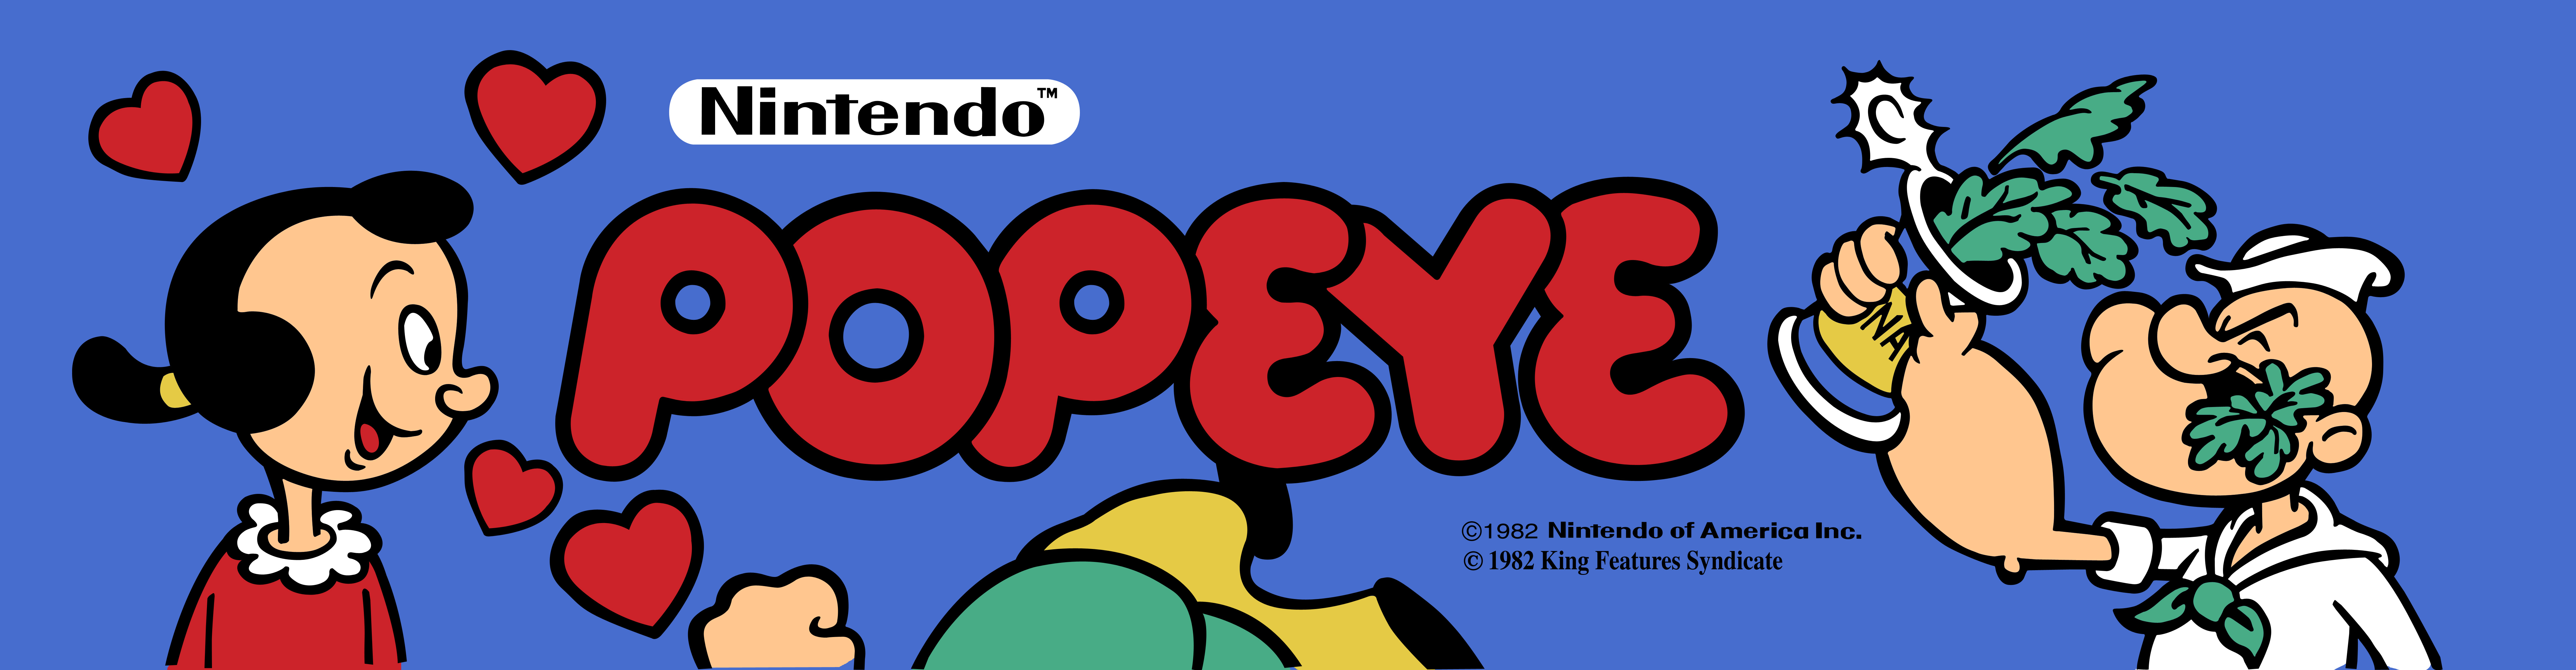 Video Game Popeye 8750x2275